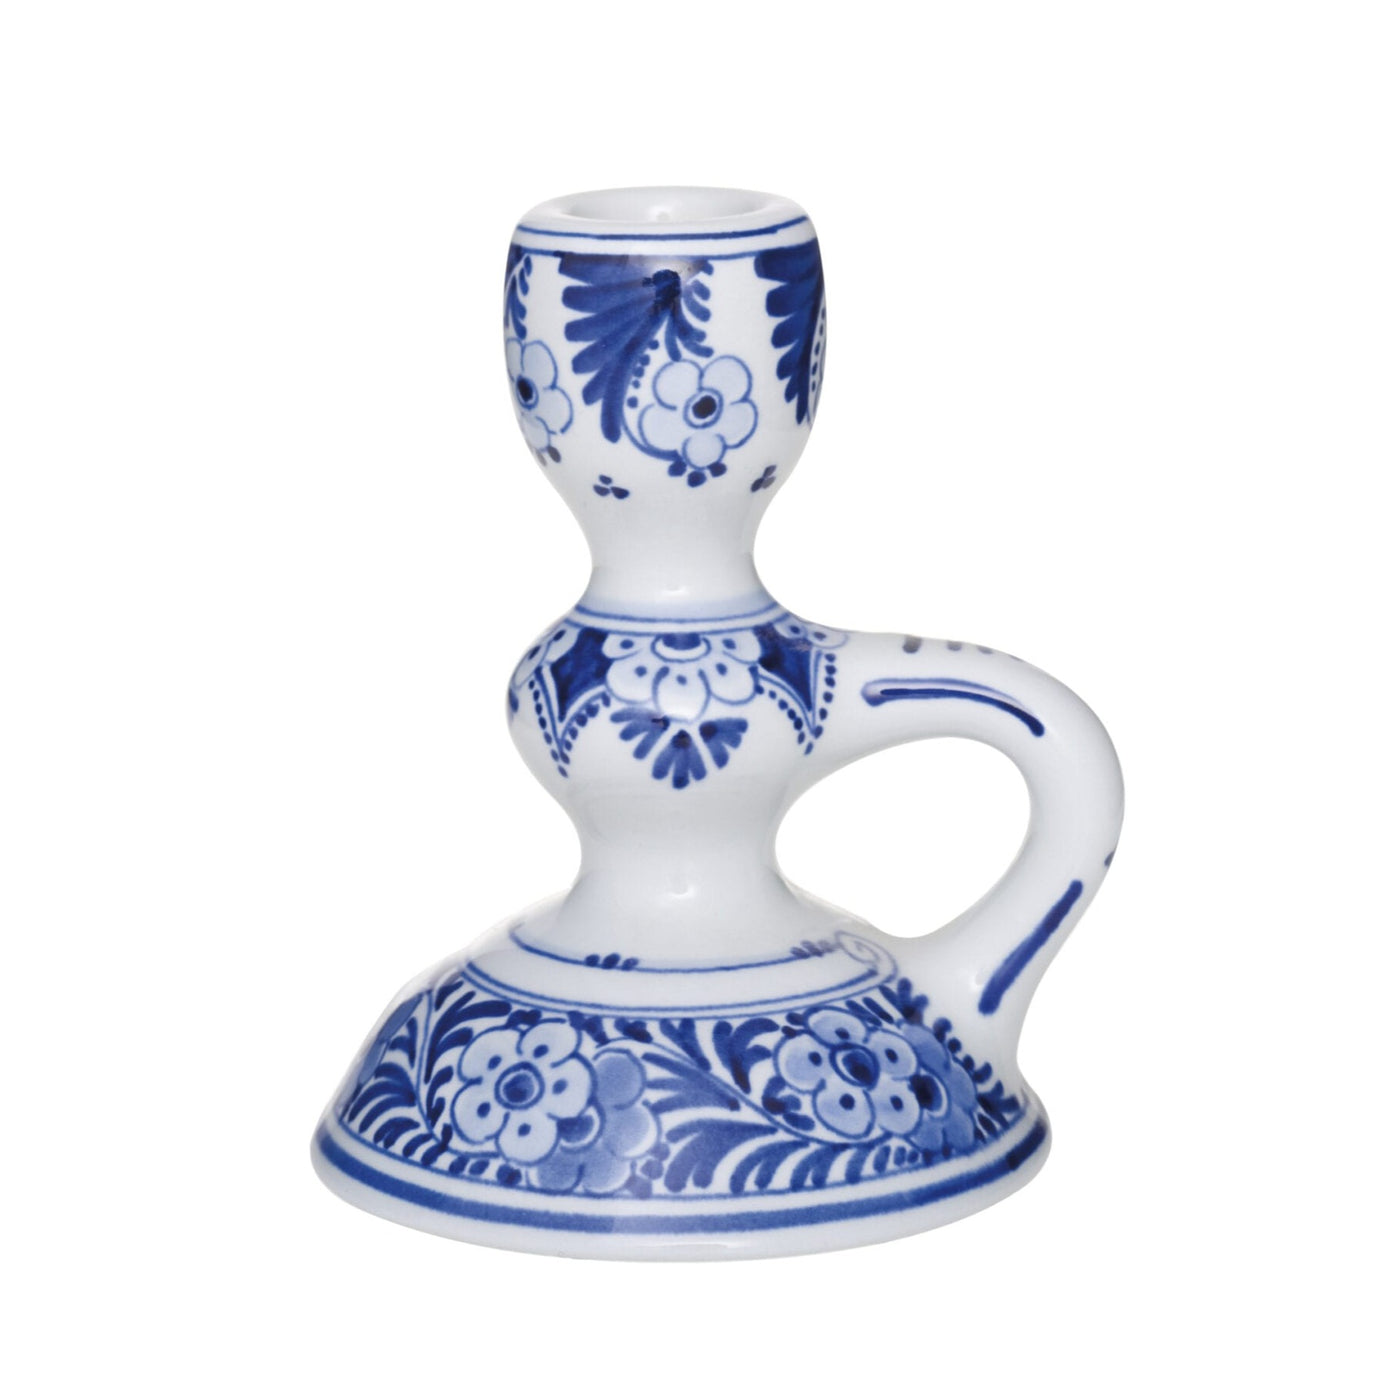 The Original Blue Candleholder Delft Blue by Royal Delft